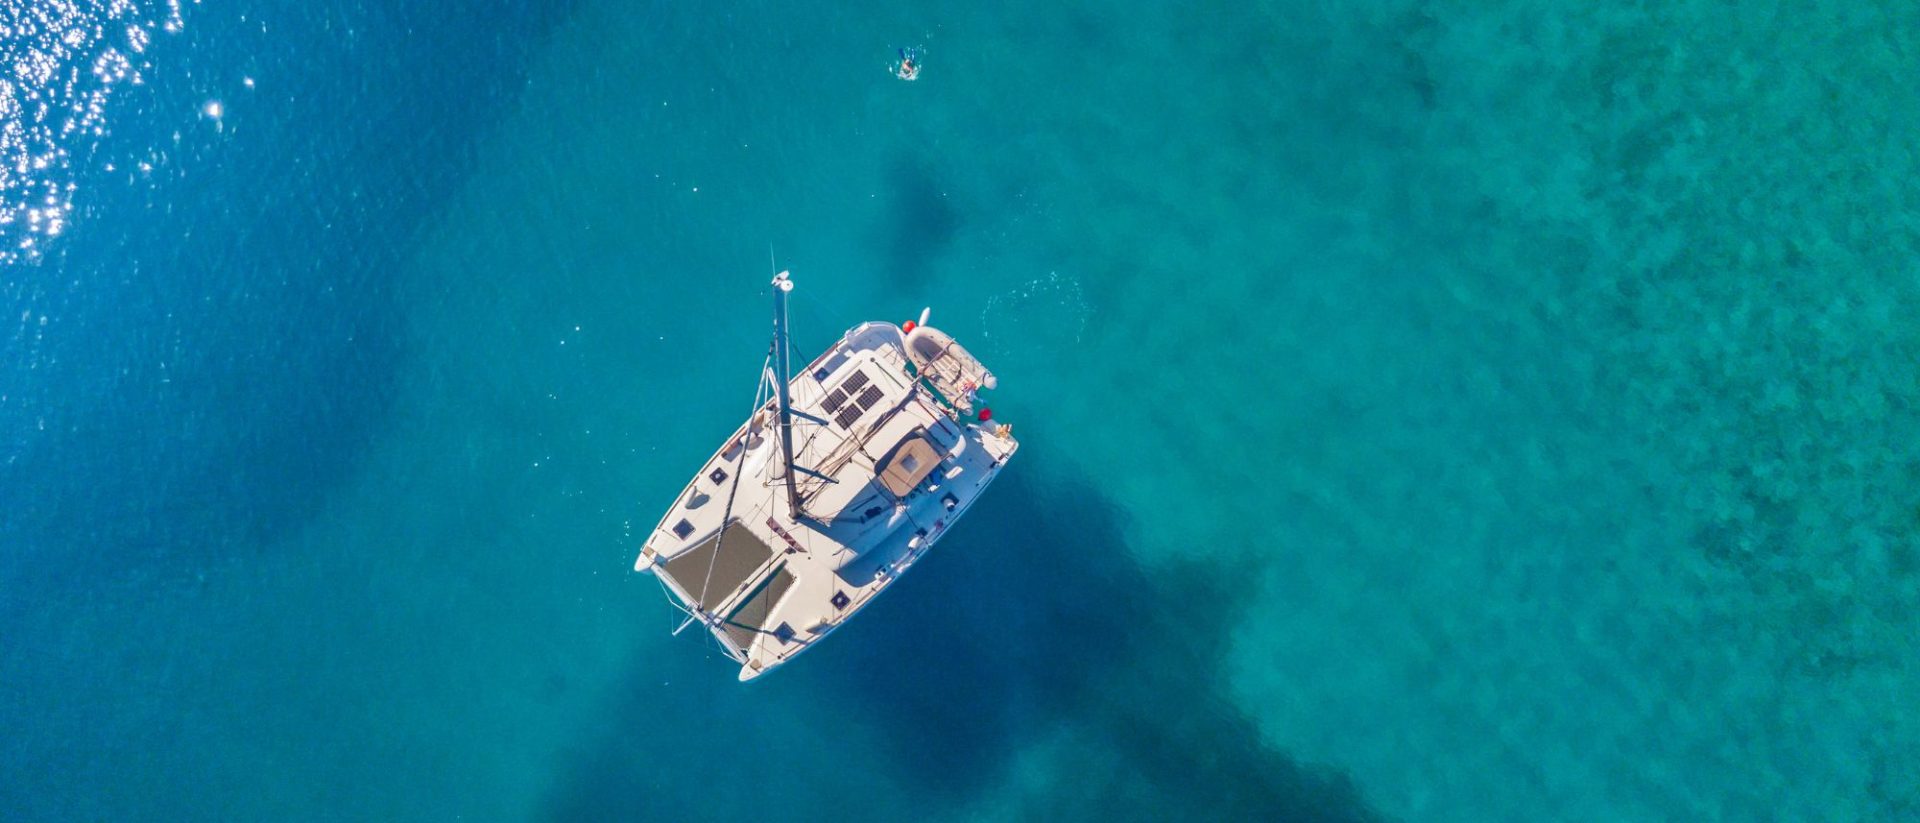 An aerial view of a catamaran sailing in the clear blue water.